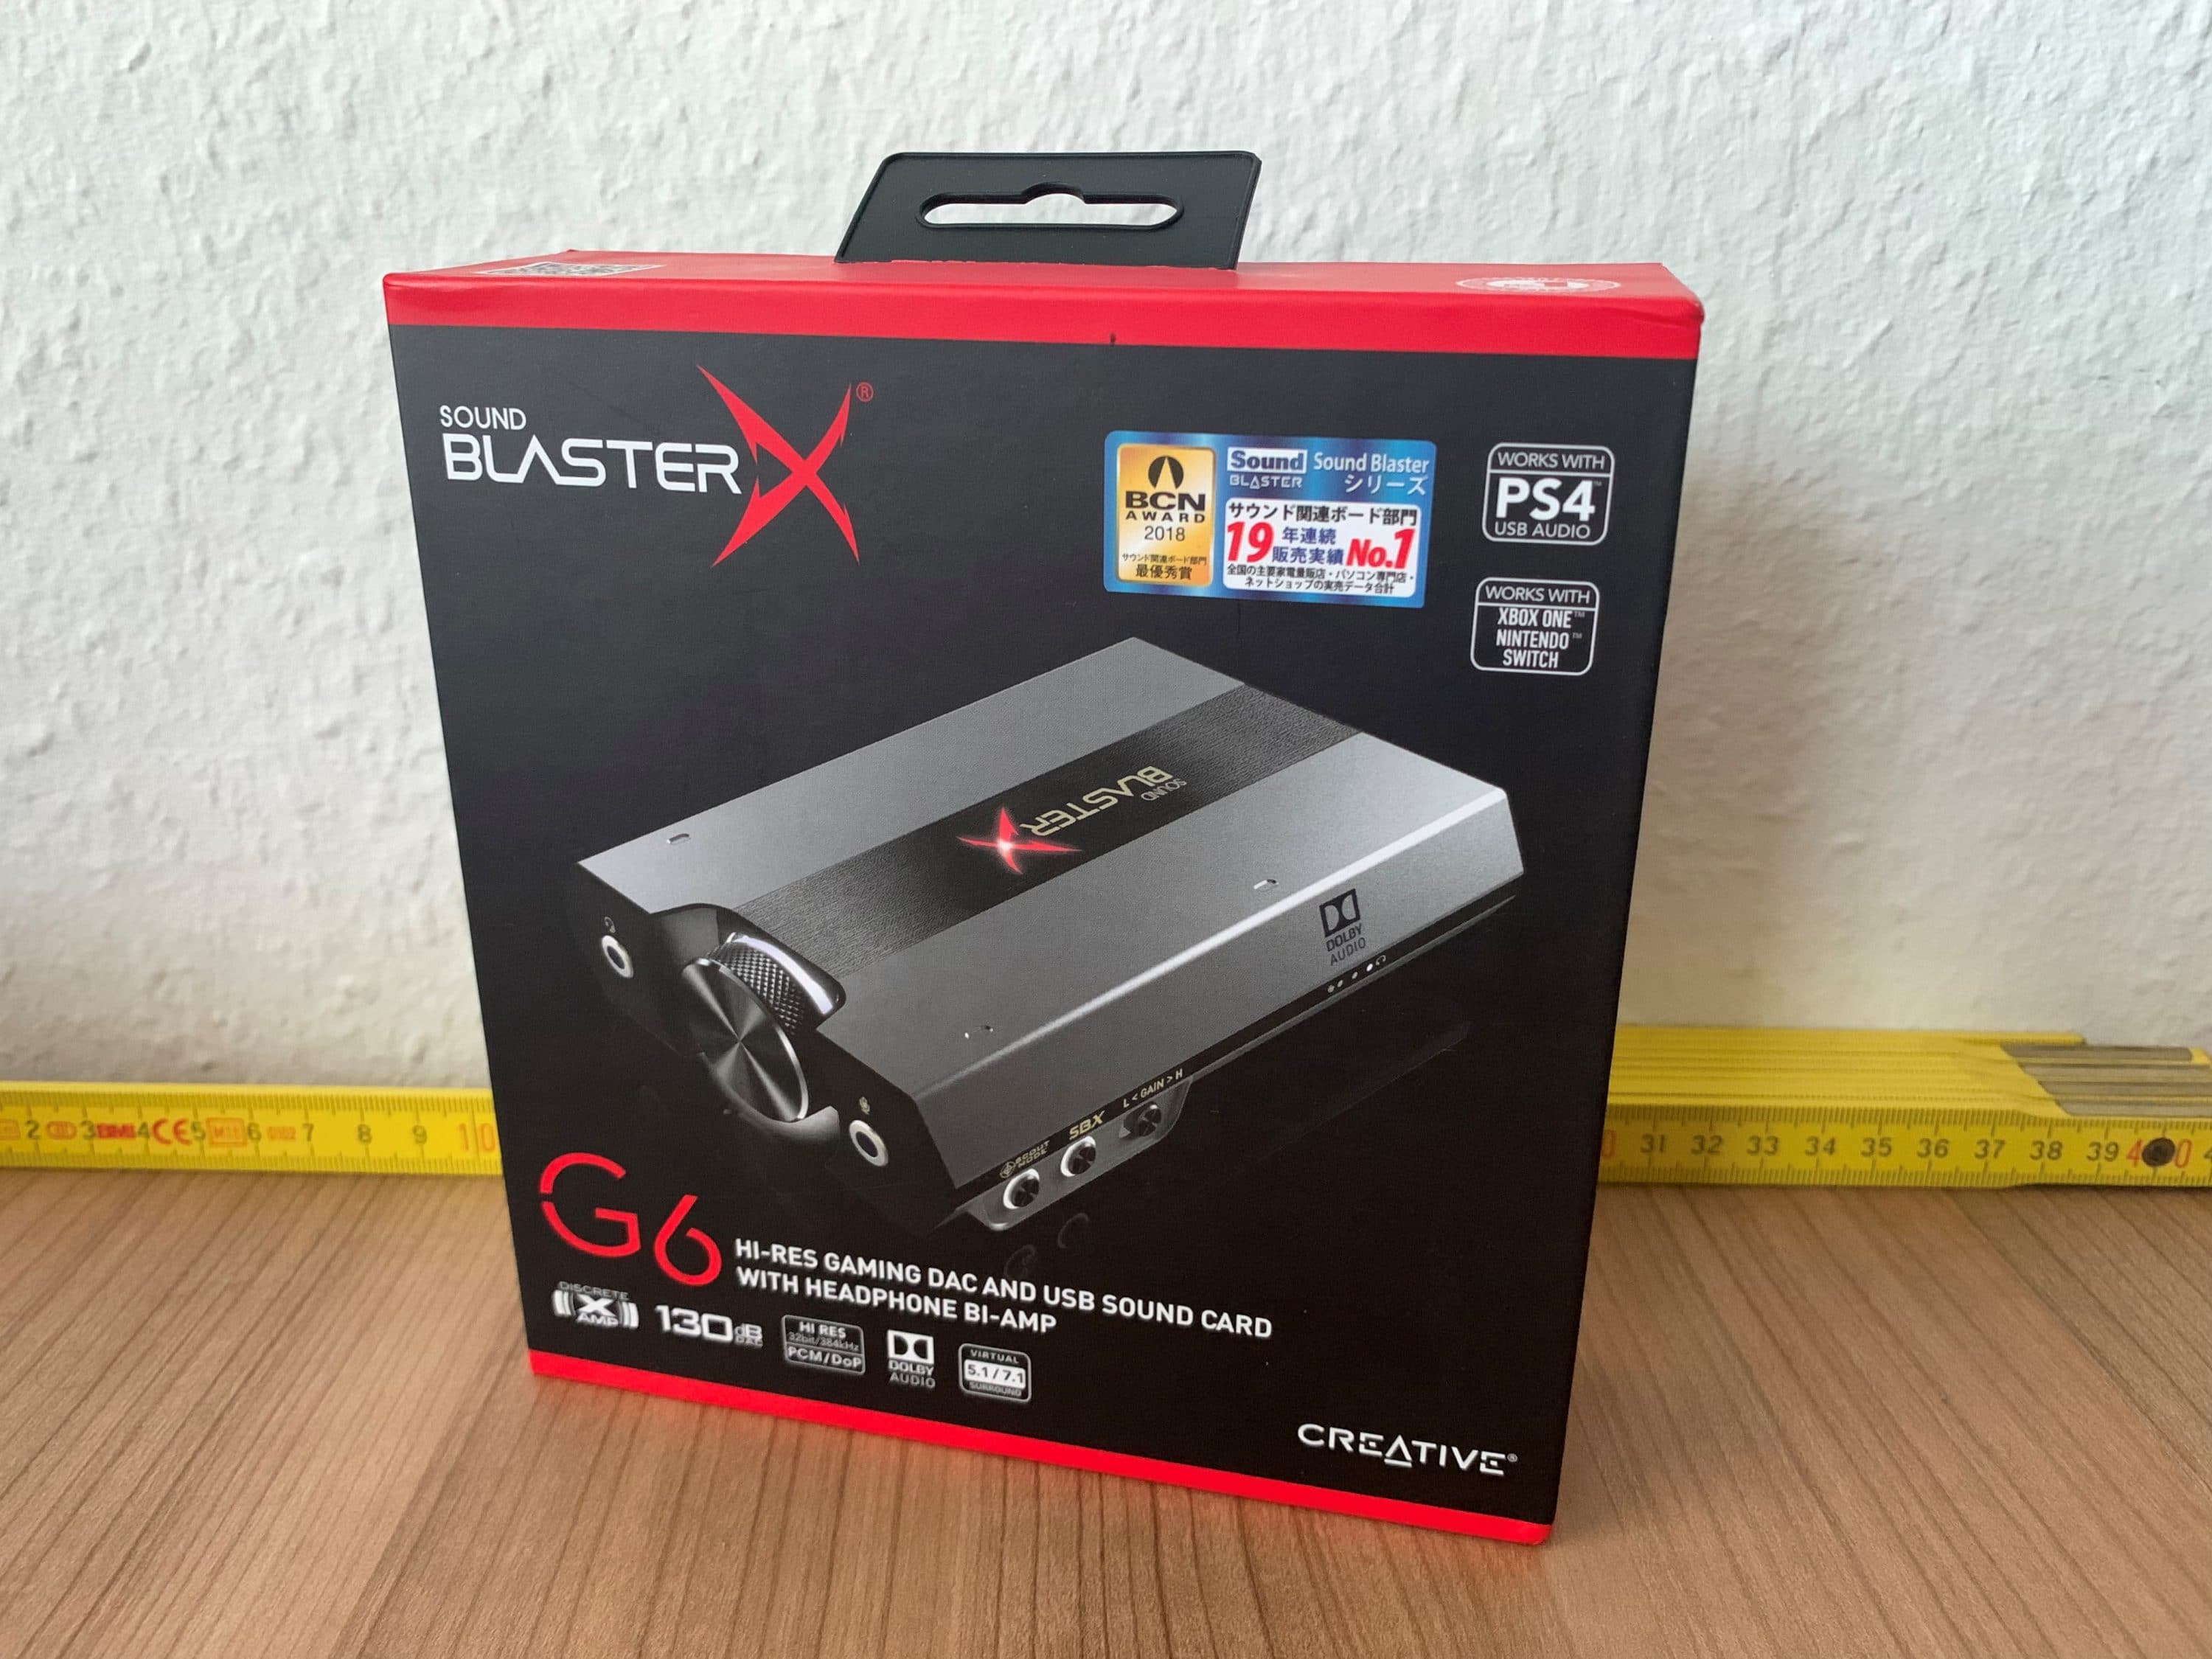 Creative Sound BlasterX G6 USB Sound Card Review: The Portable 